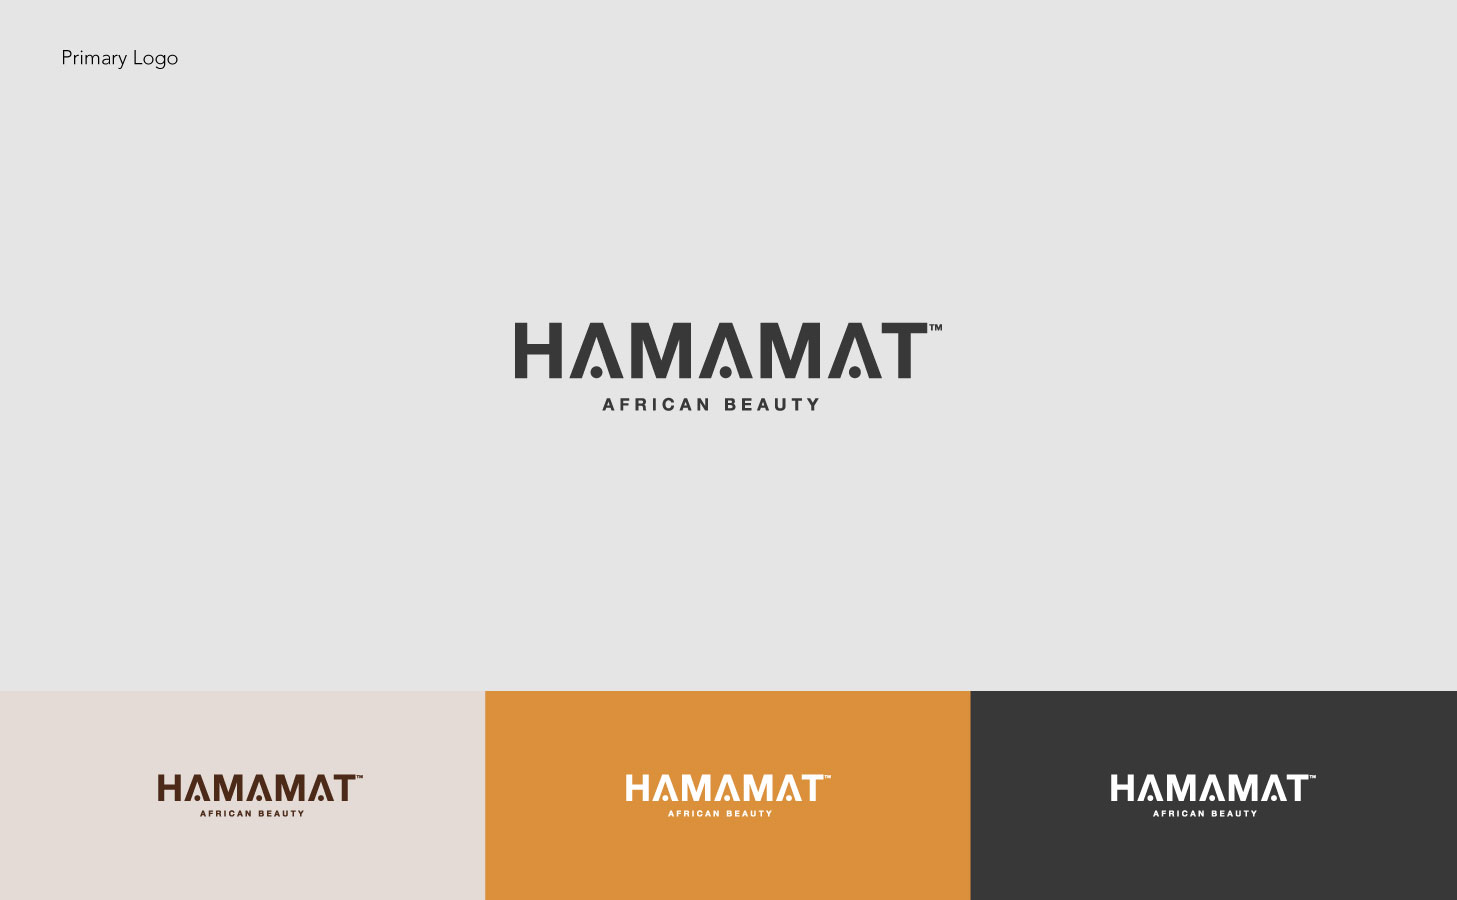 Hamamat Brand Identity Designs